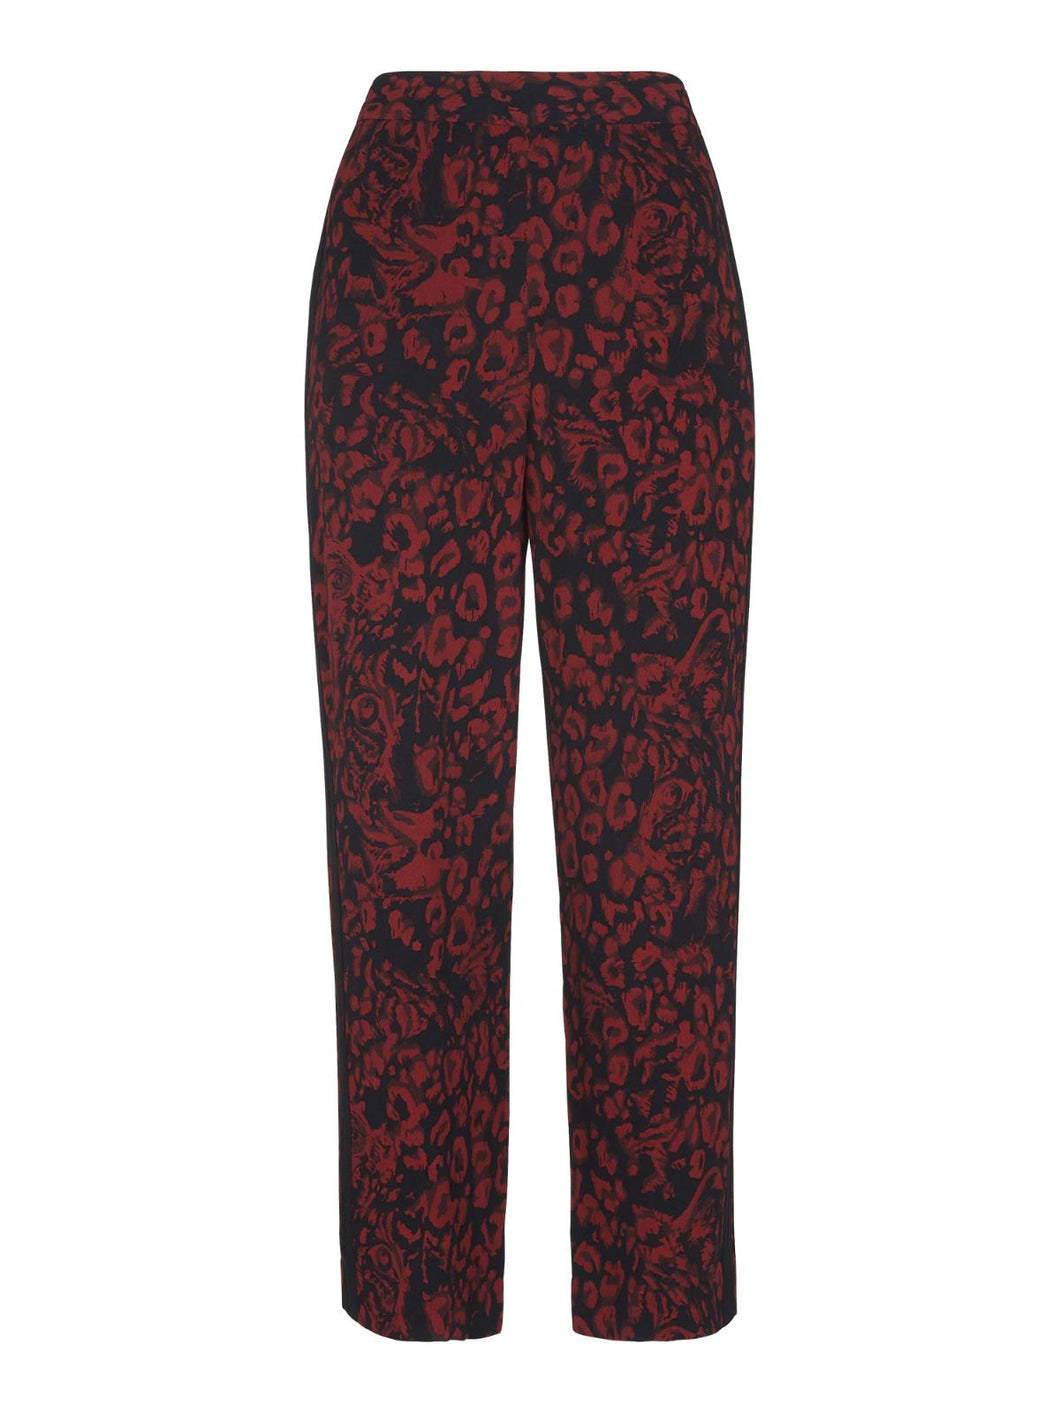 WHISTLES Ladies Red/Multi Jungle Cat Print Crepe Trousers RRP129 UK8 NEW